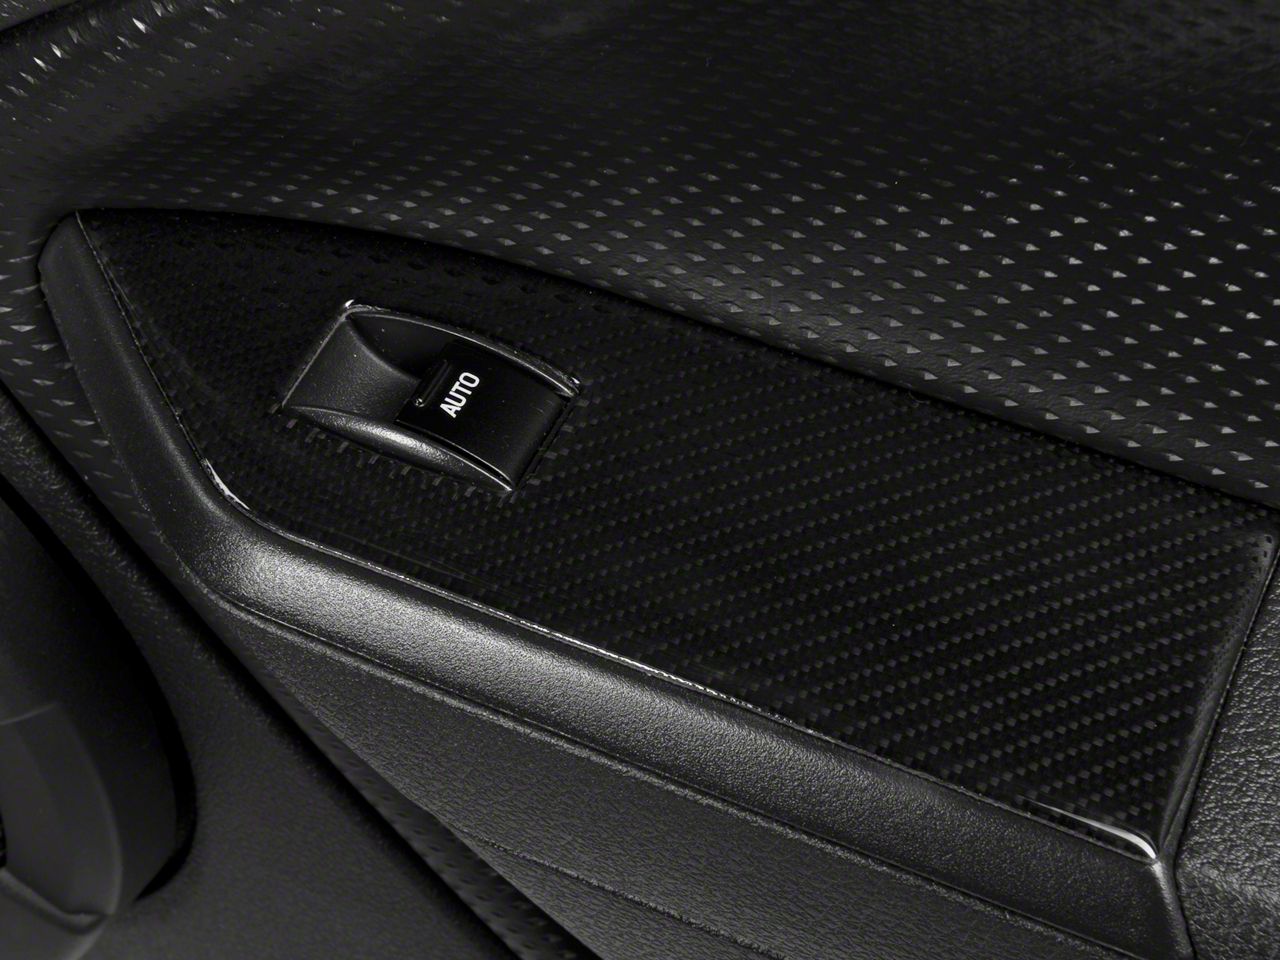 Mustang Interior Trim - Carbon Fiber